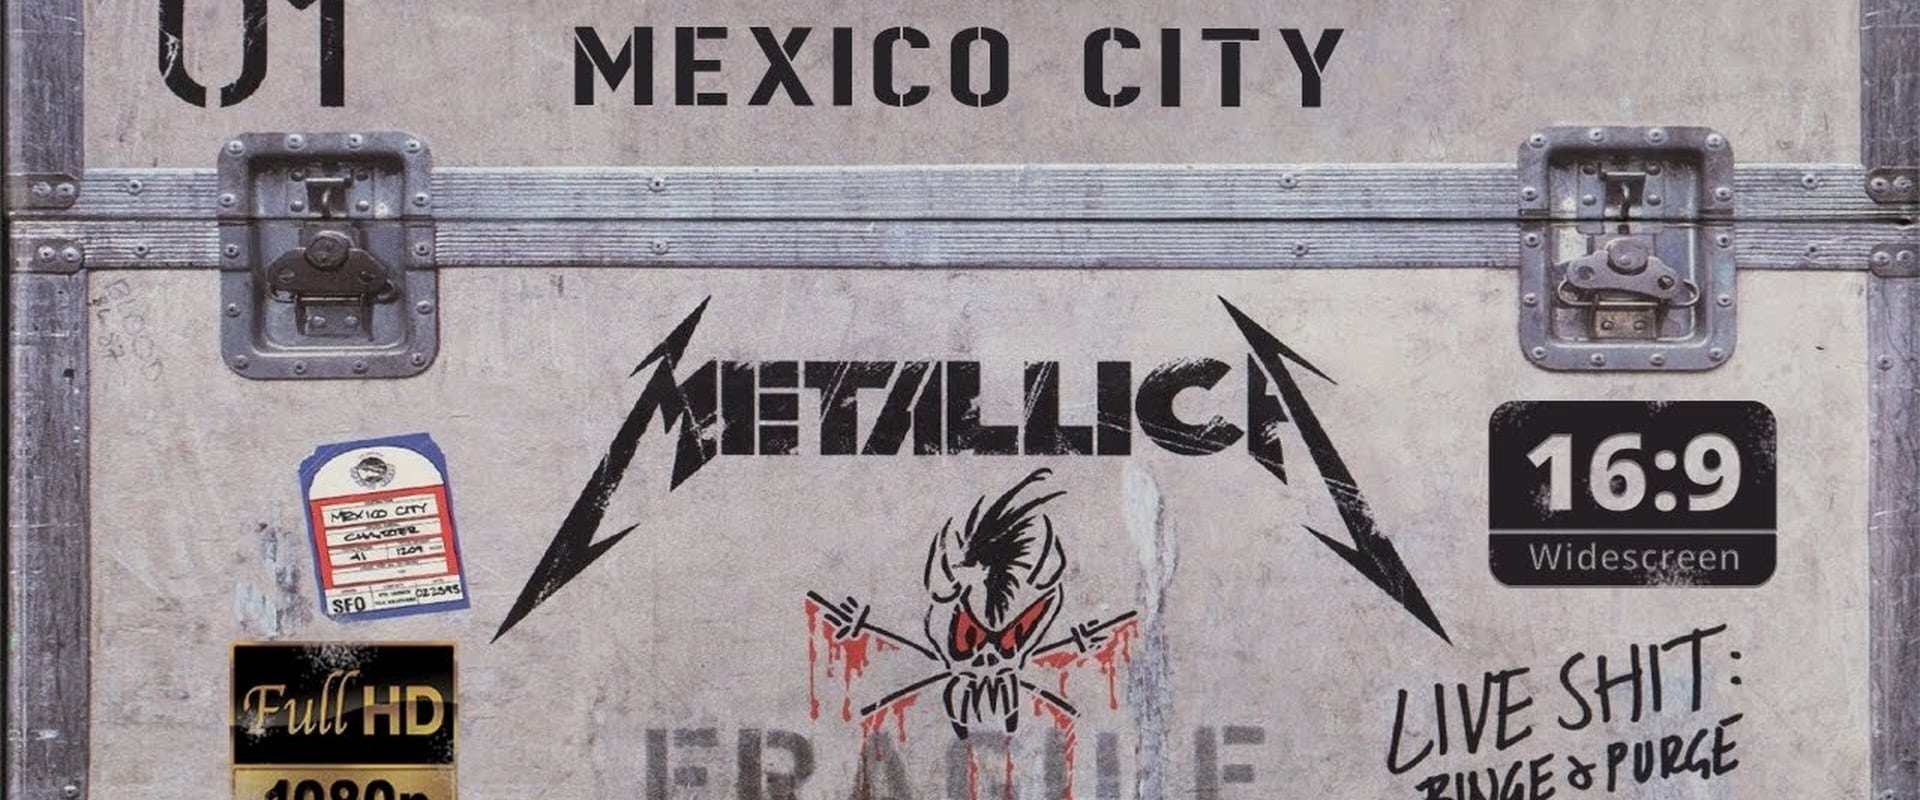 Metallica - Live Shit Binge & Purge (Seattle 1989)